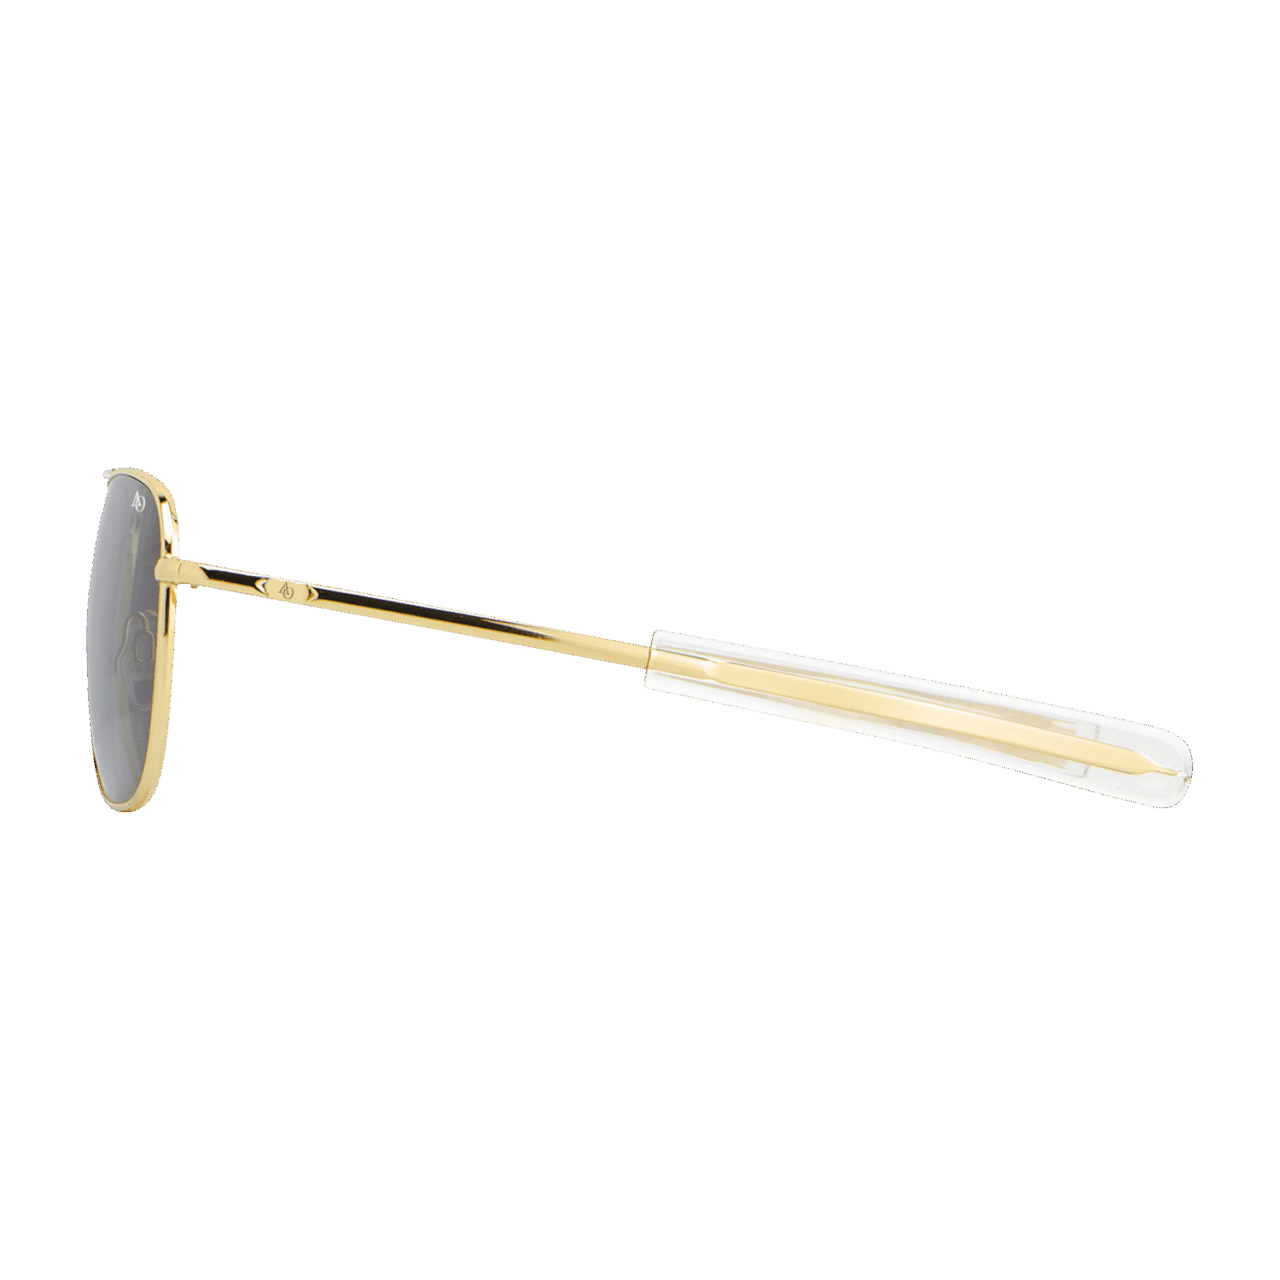 American Optical Pilotenbrille - Gold- / True Color grau